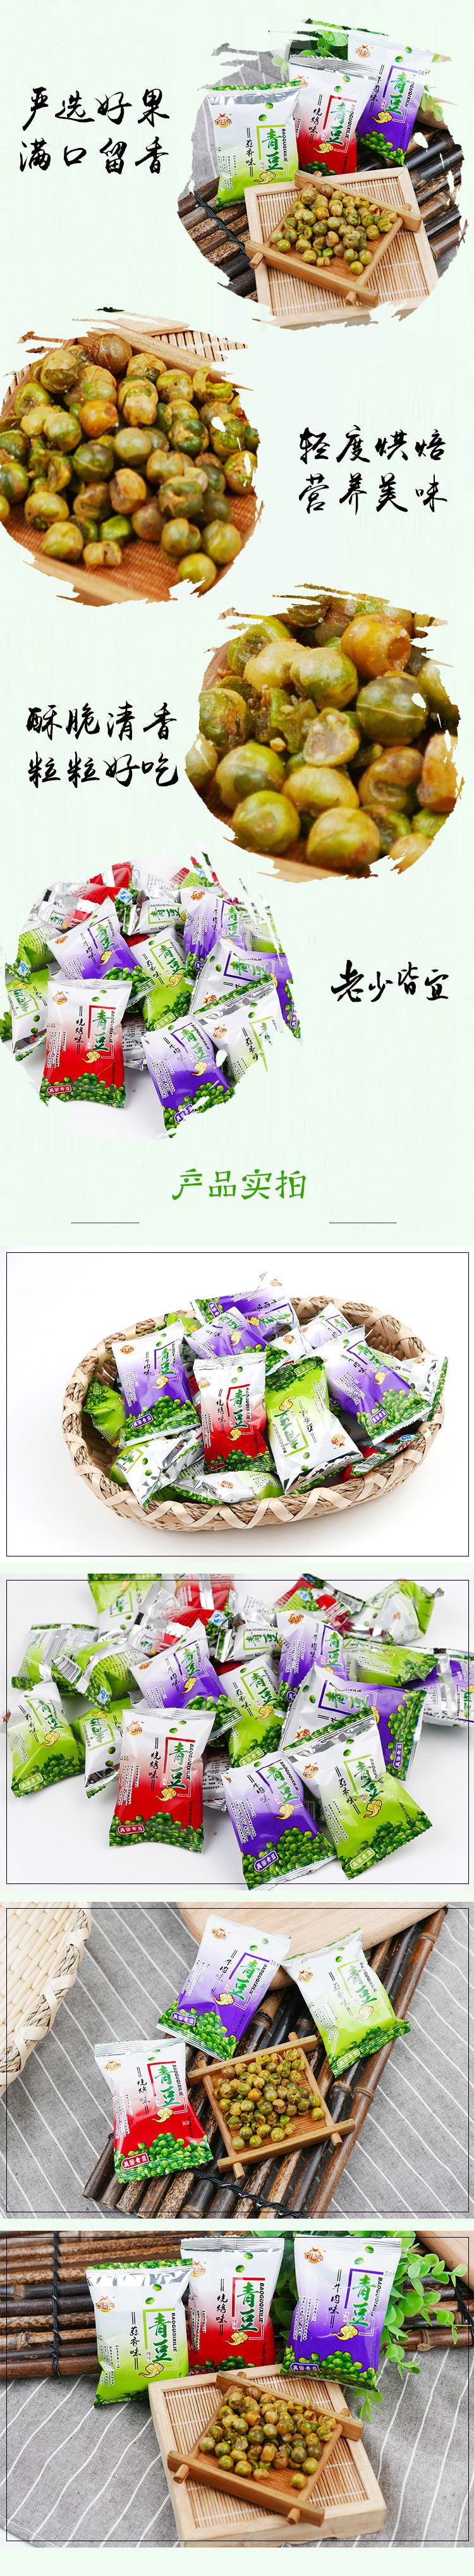 H919宝谷奇 青豆小包装豌豆500克（约23-25袋）混合口味（牛肉味+蒜香味+烧烤味）休闲食品